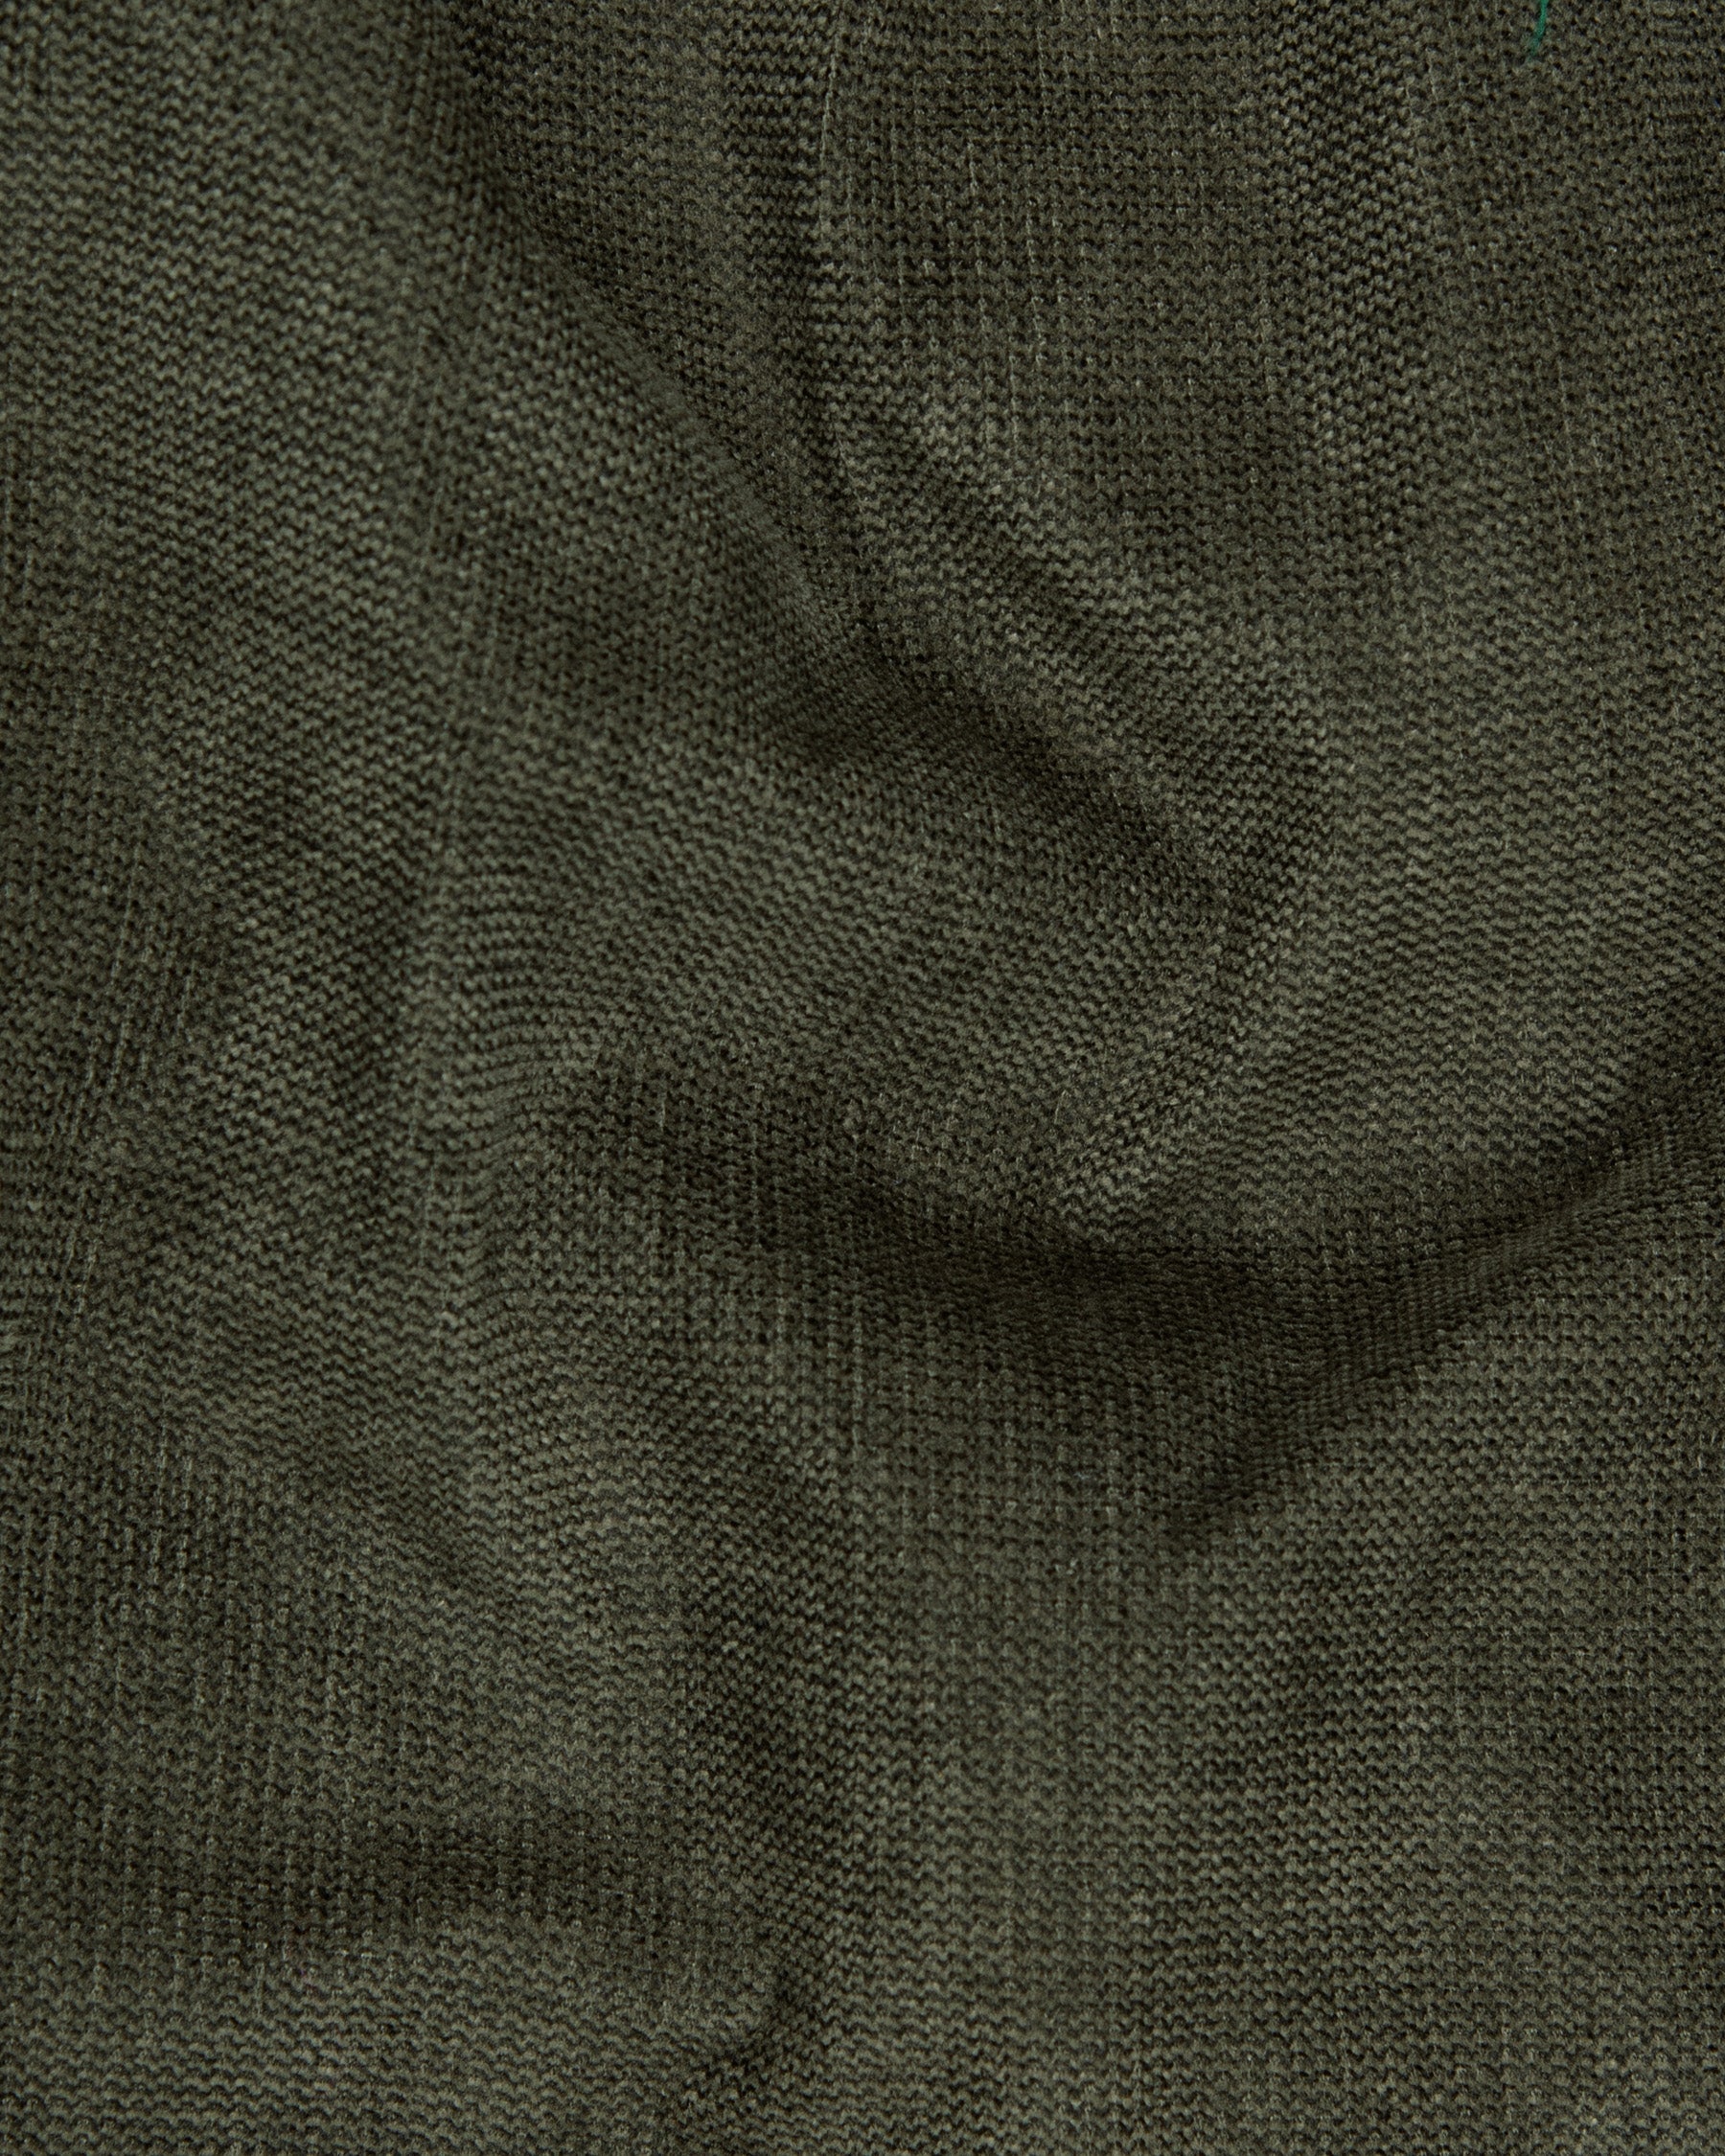 Merlin Green  Premium Cotton Waistcoat V1299-36, V1299-38, V1299-40, V1299-42, V1299-44, V1299-46, V1299-48, V1299-50, V1299-52, V1299-54, V1299-56, V1299-58, V1299-60